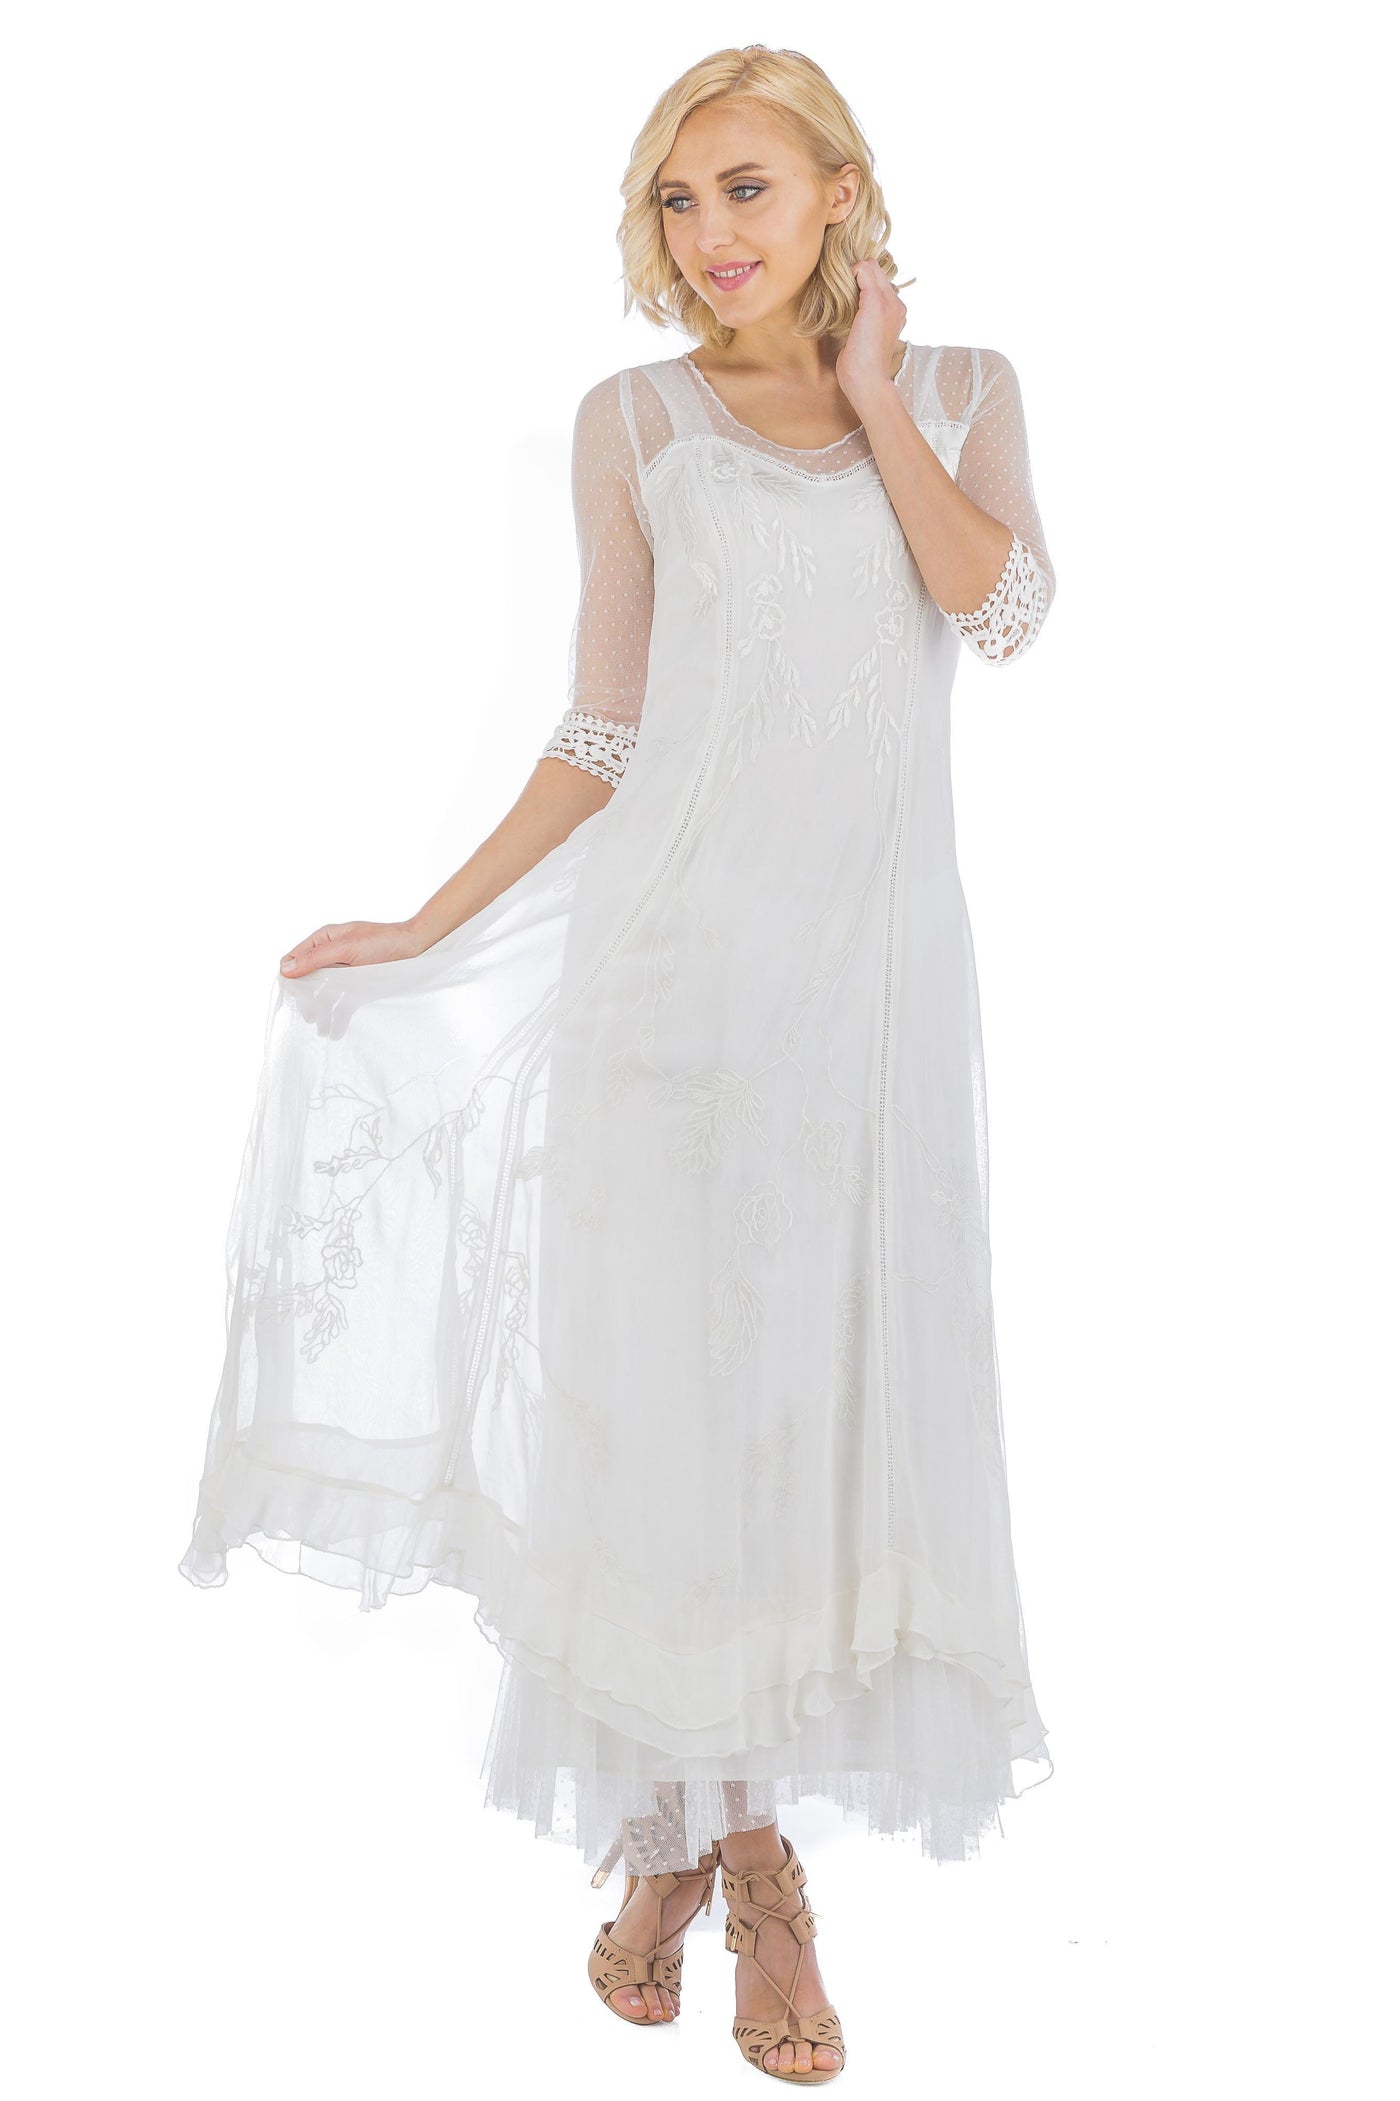 Celine Vintage Style Wedding Gown in Ivory by Nataya